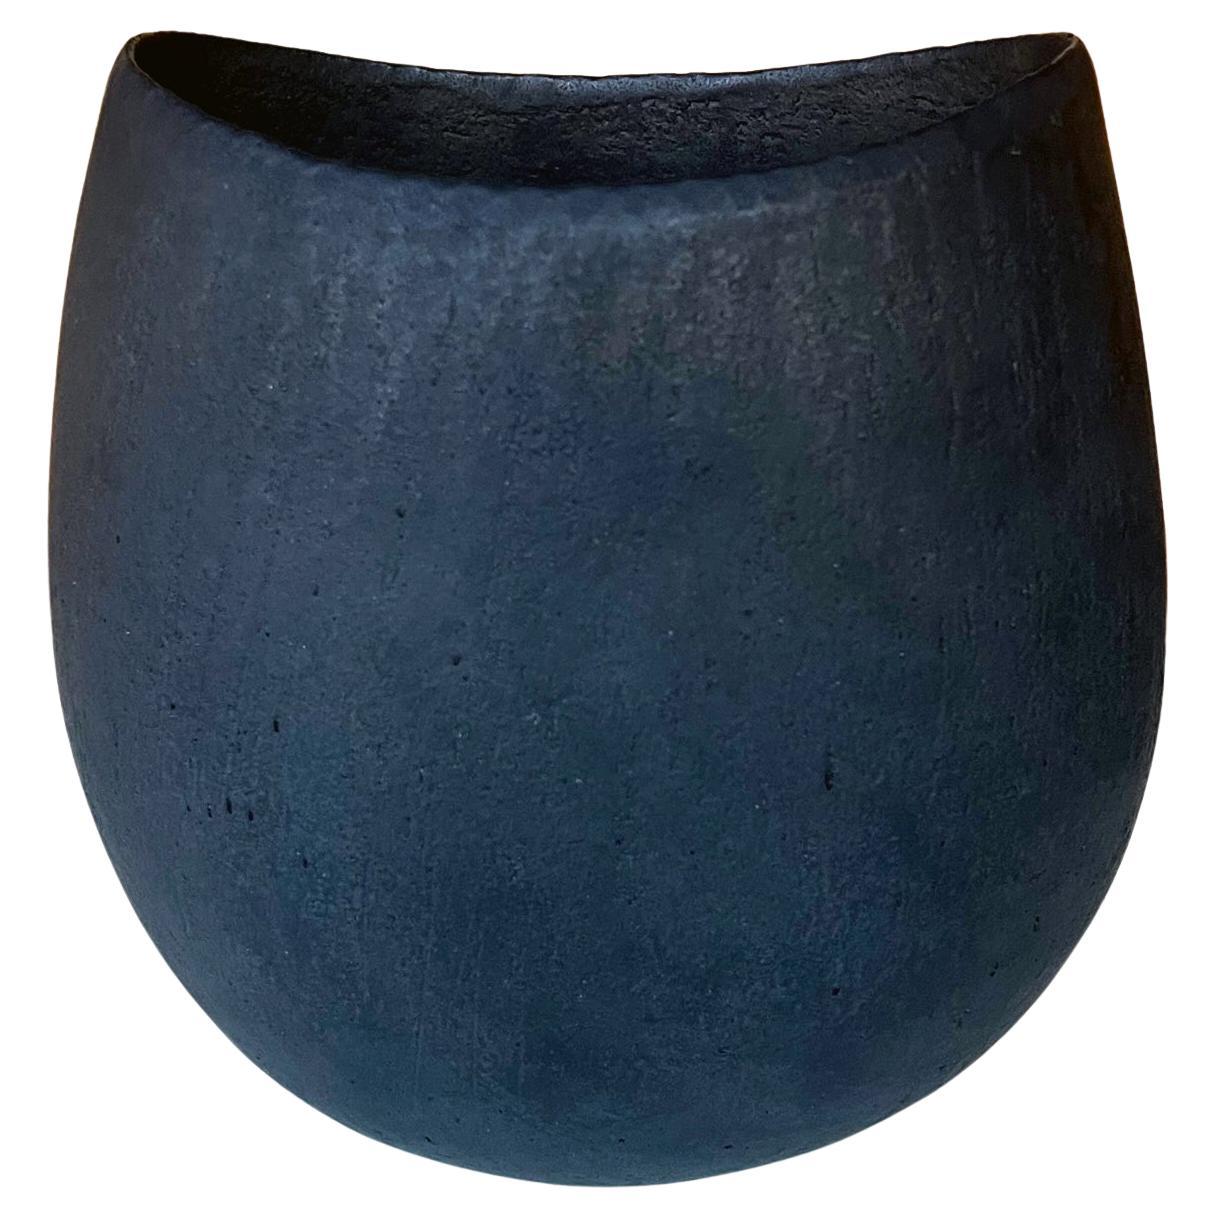 Ceramic Oval Vessel by British Studio Potter John Ward For Sale